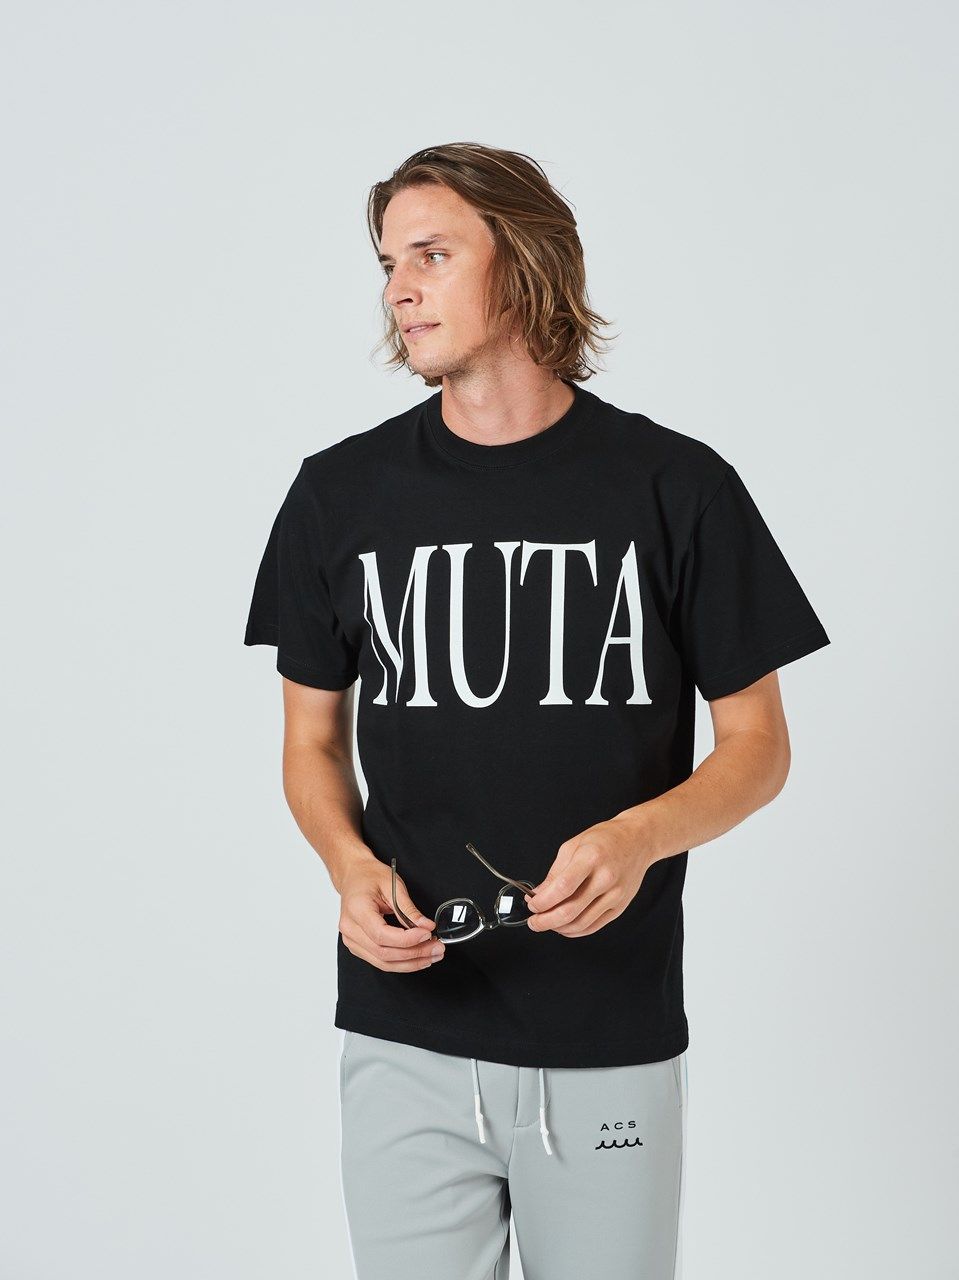 muta - ムータ 洋服通販 | BRYAN